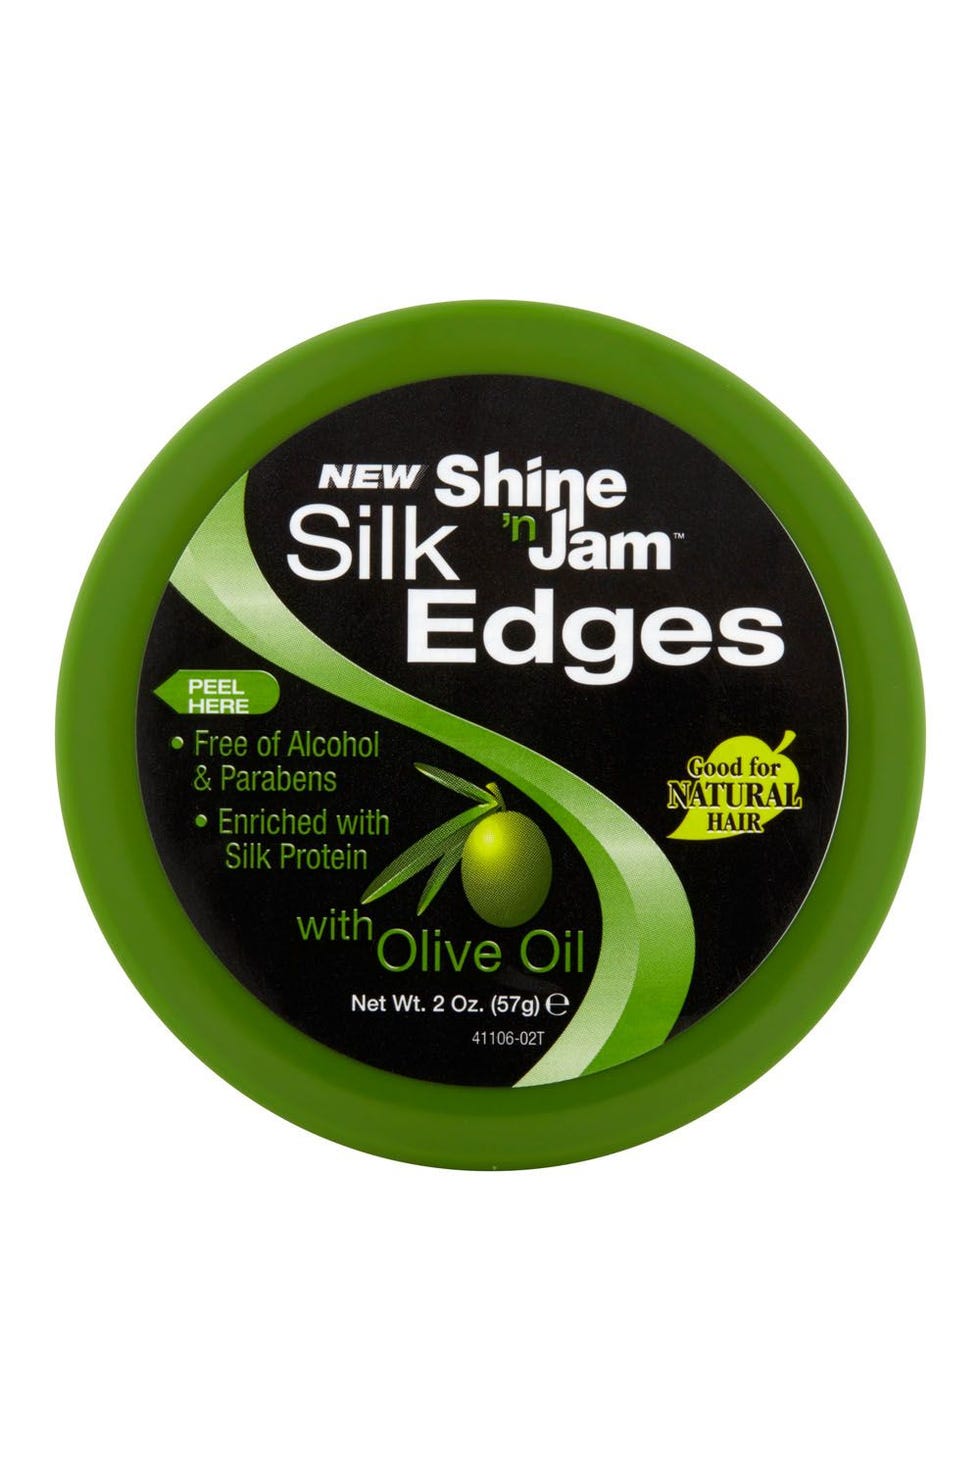 Styl Shine ’n Jam Silk Edges